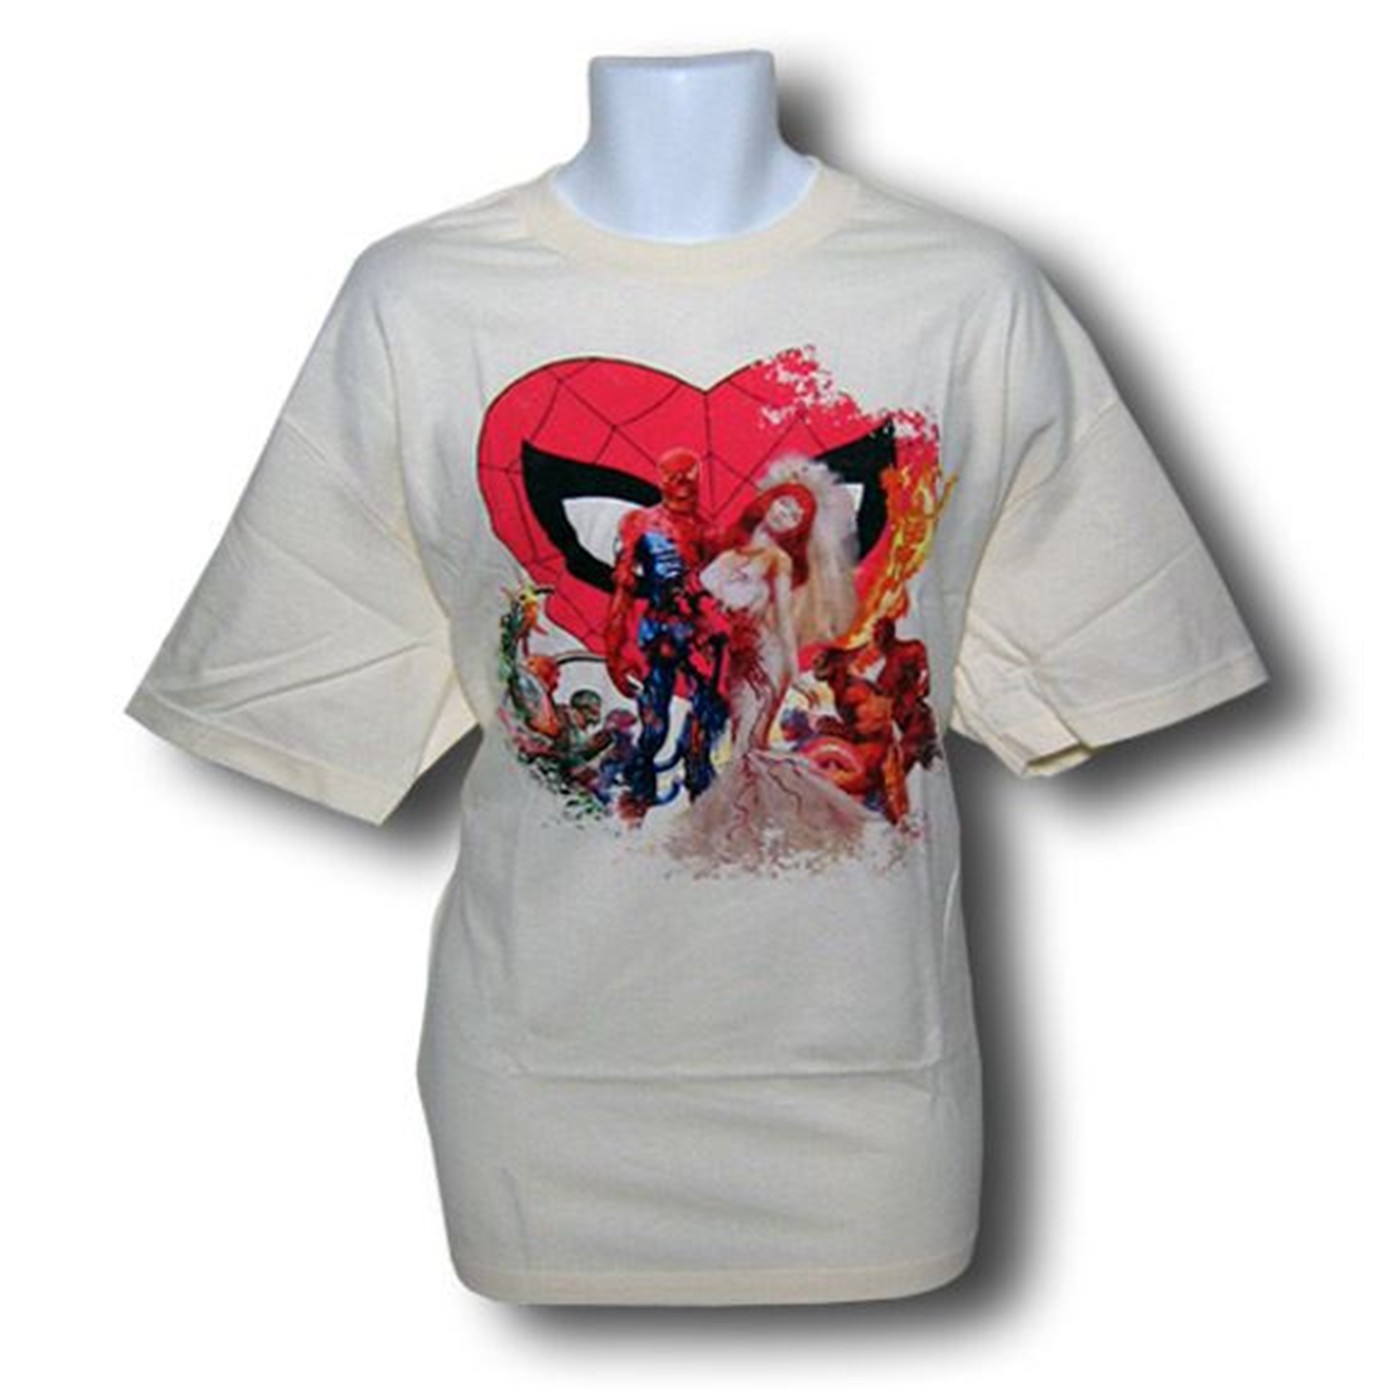 Spiderman T-Shirt Dead Wedding